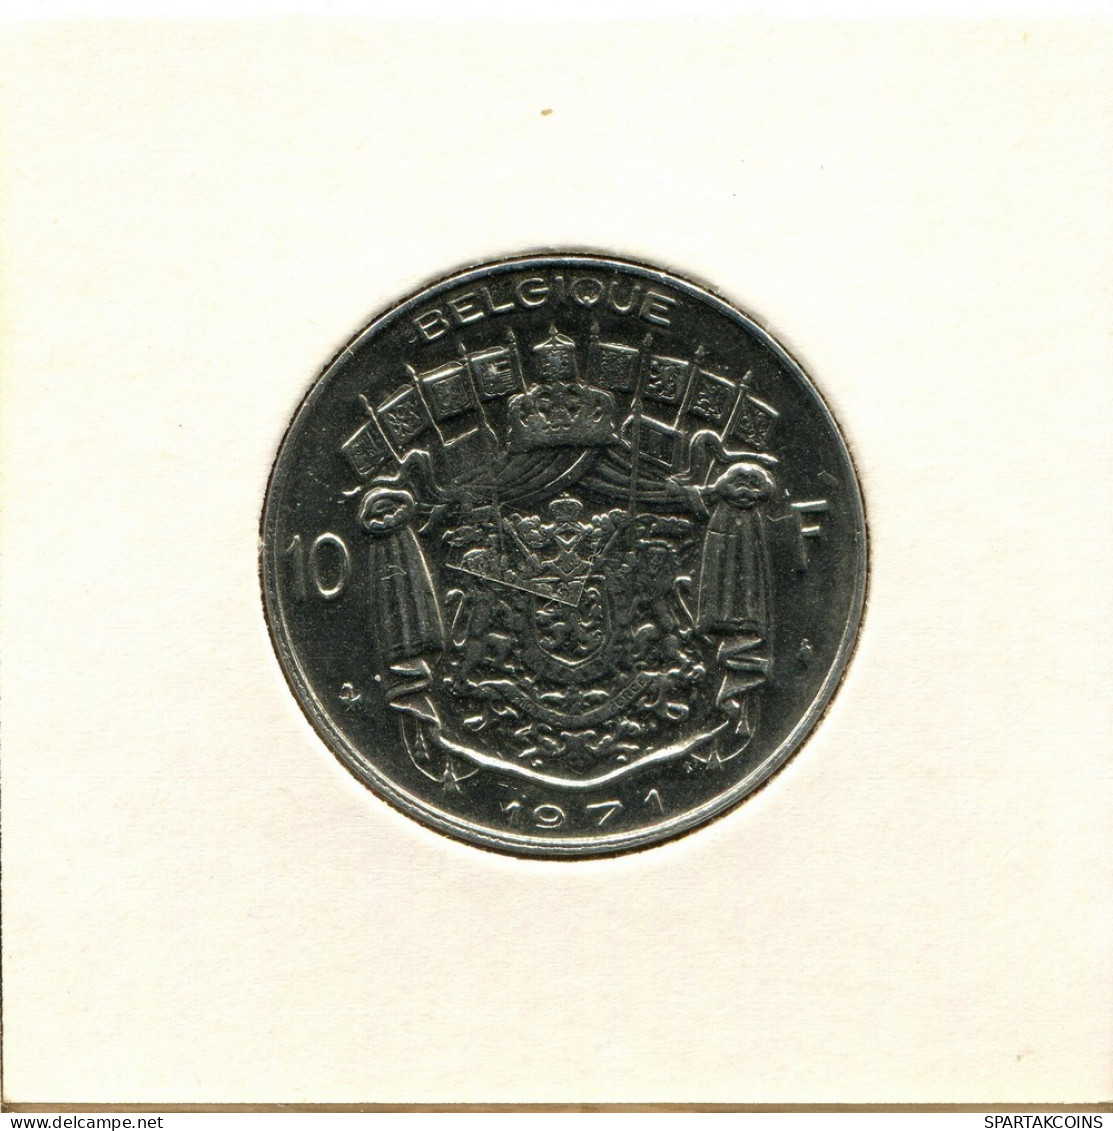 10 FRANCS 1971 Französisch Text BELGIEN BELGIUM Münze #BB355.D.A - 10 Francs